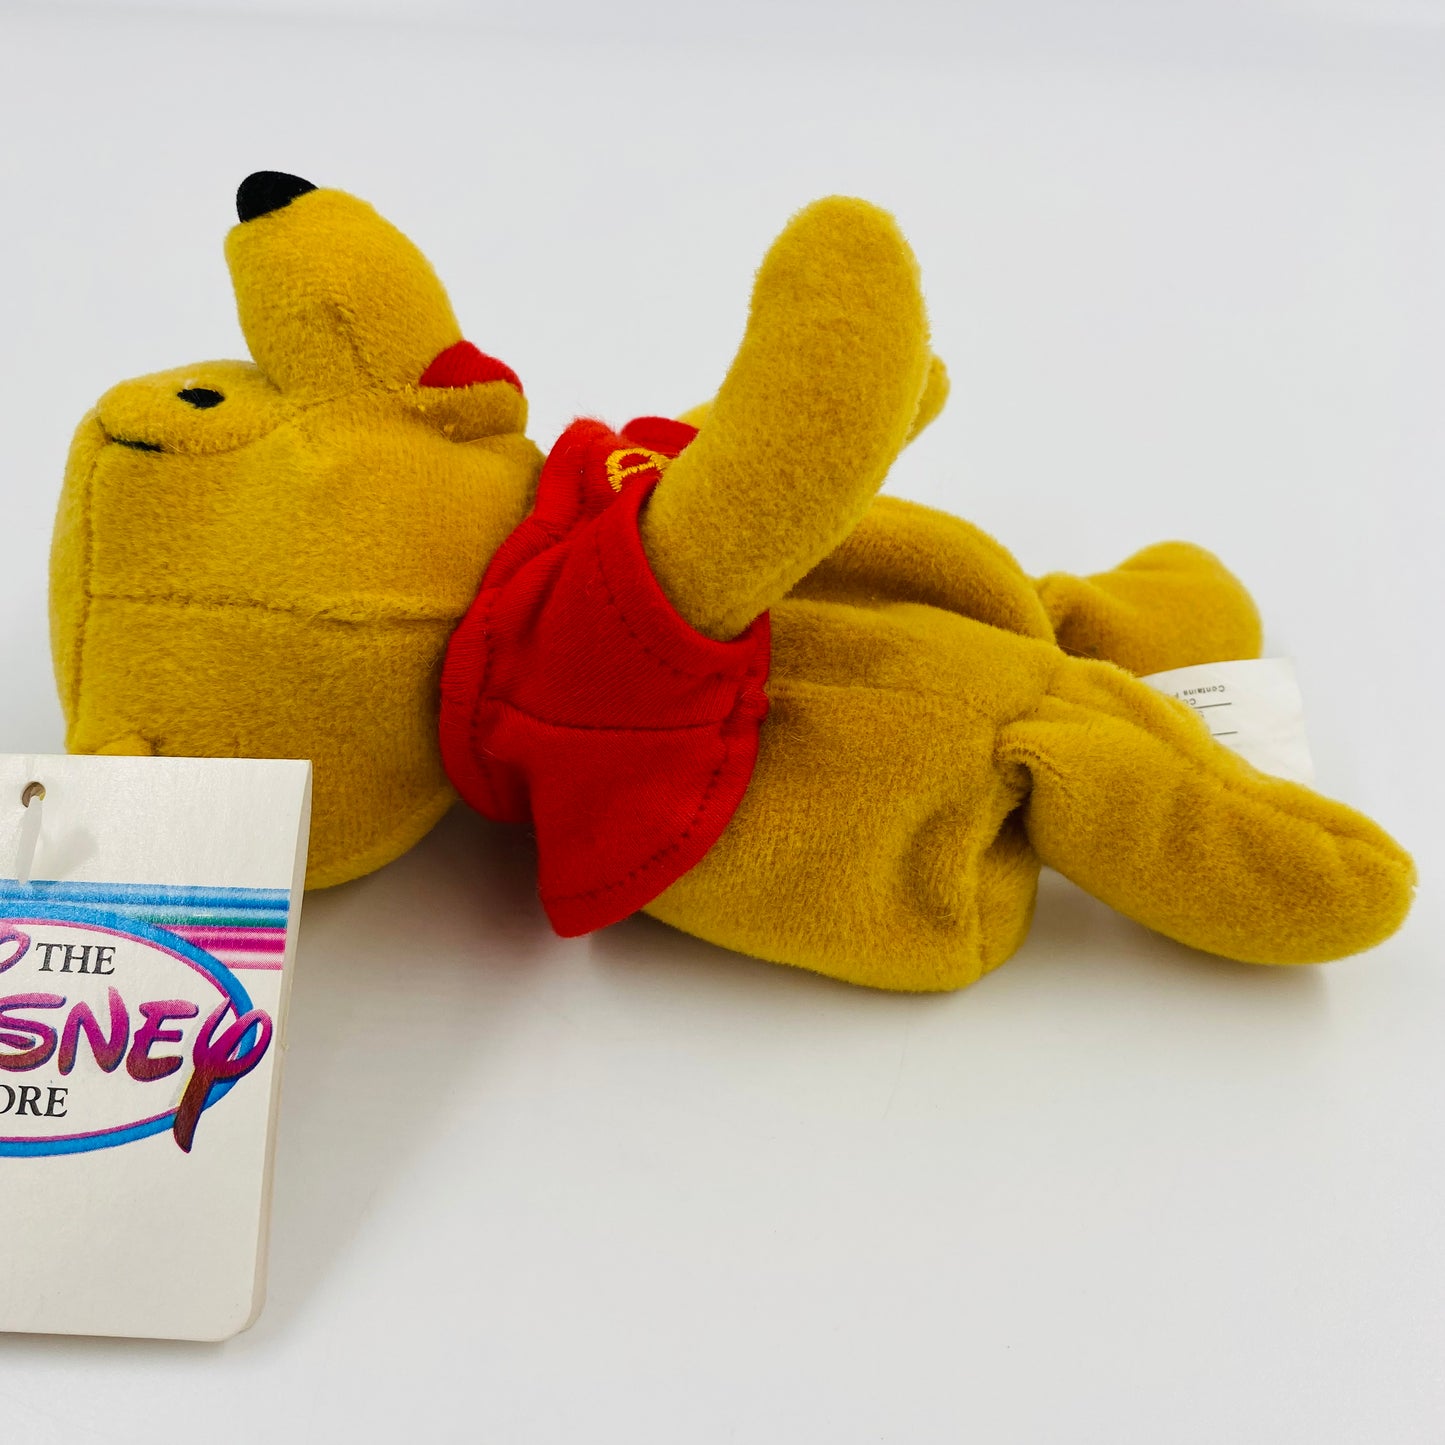 The Disney Store Winnie the Pooh mini bean bag plush